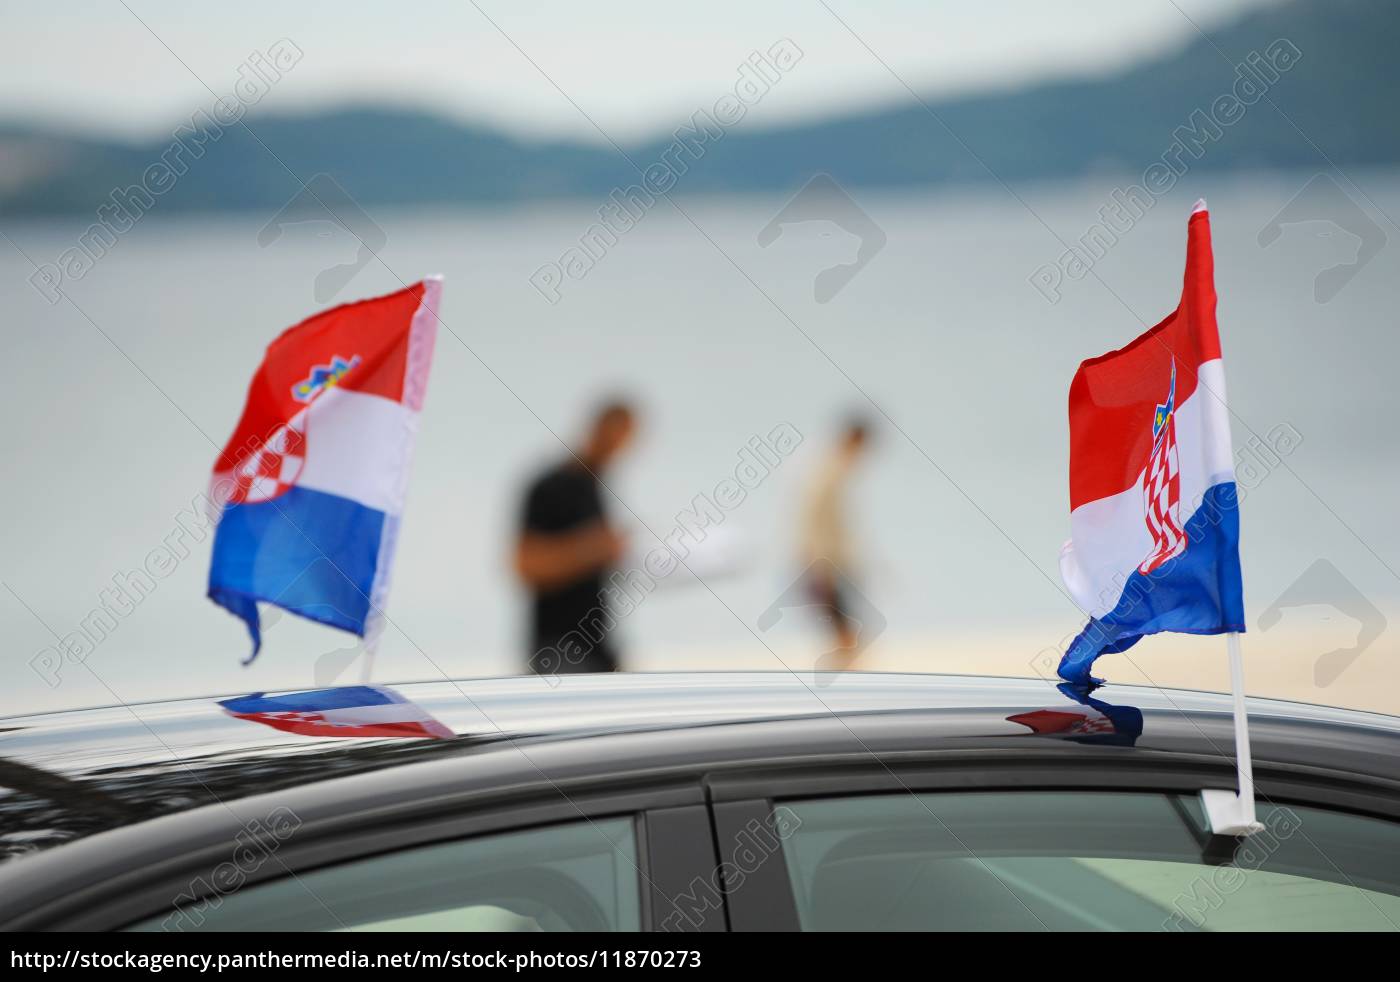 Kroatische Flagge an Autofenster befestigt - Lizenzfreies Bild #11870273